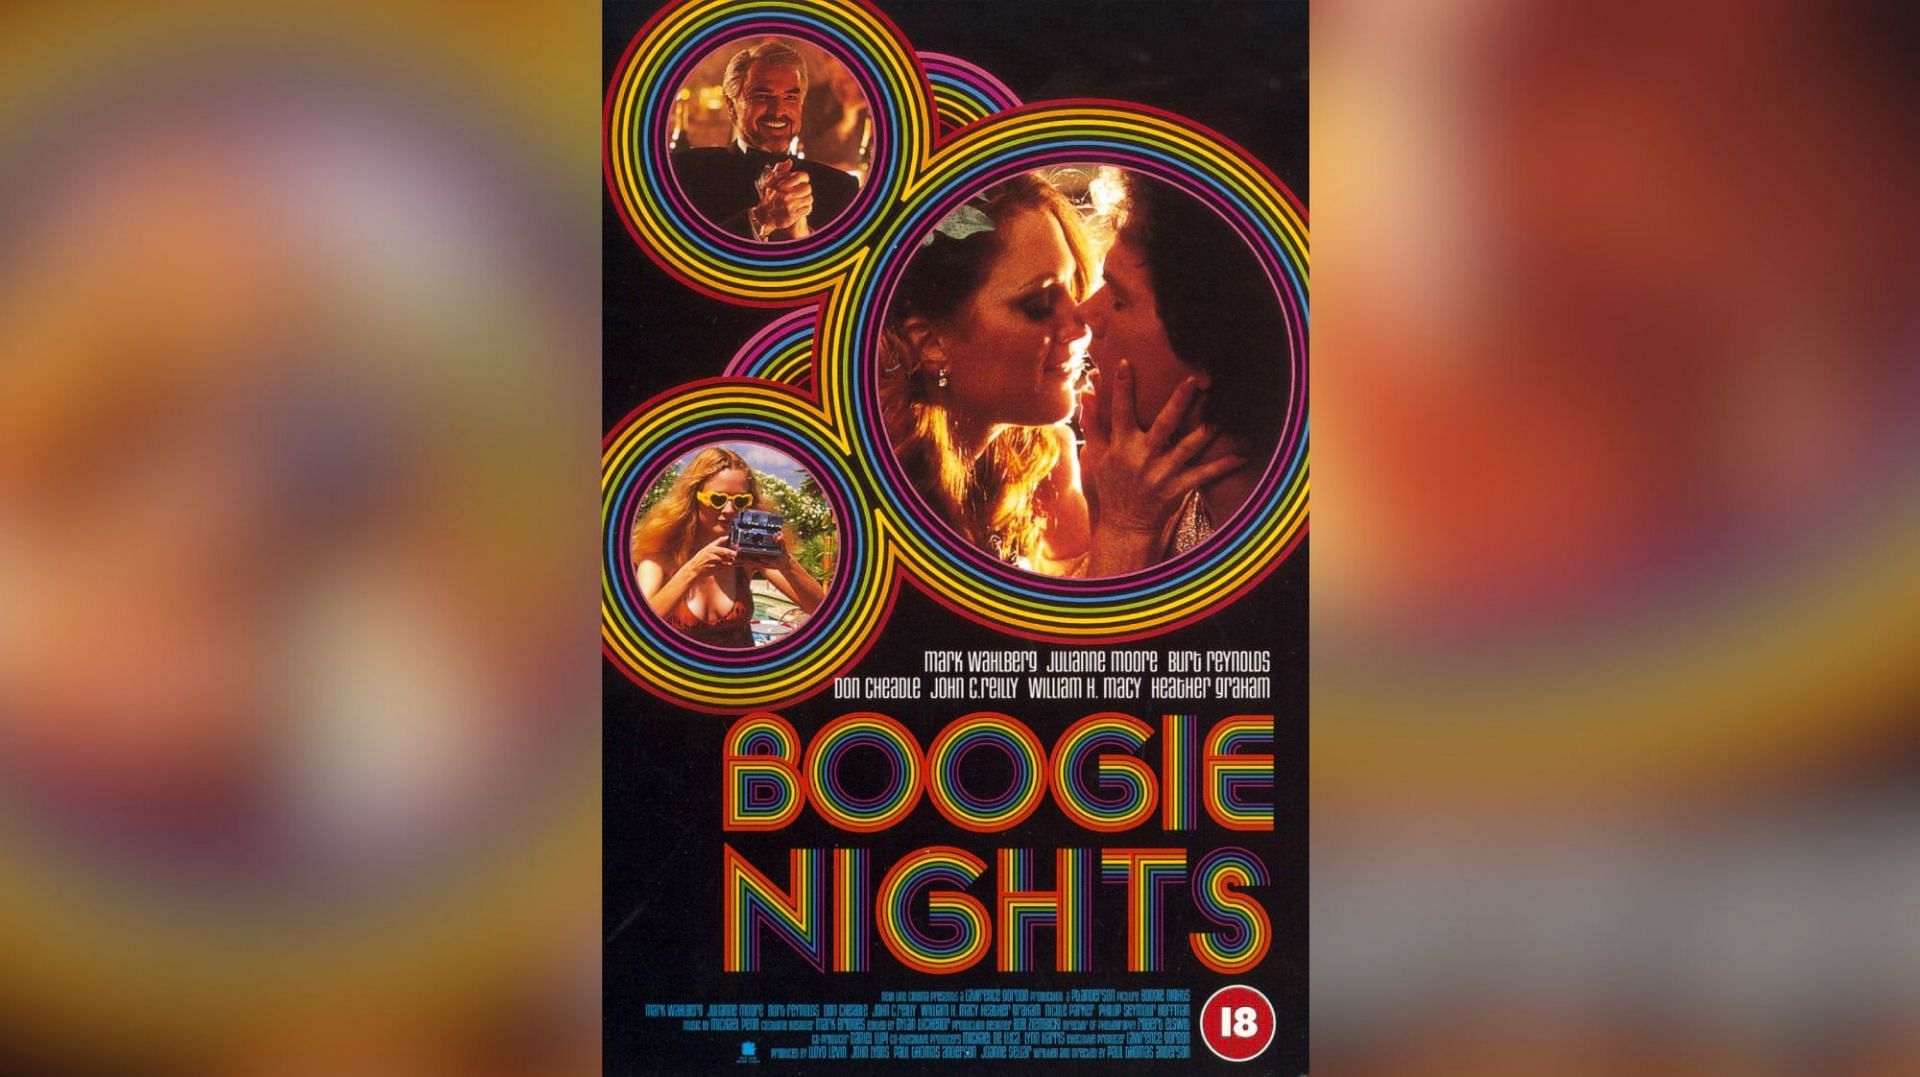 Boogie NIghts (Image via New Line Cinema)